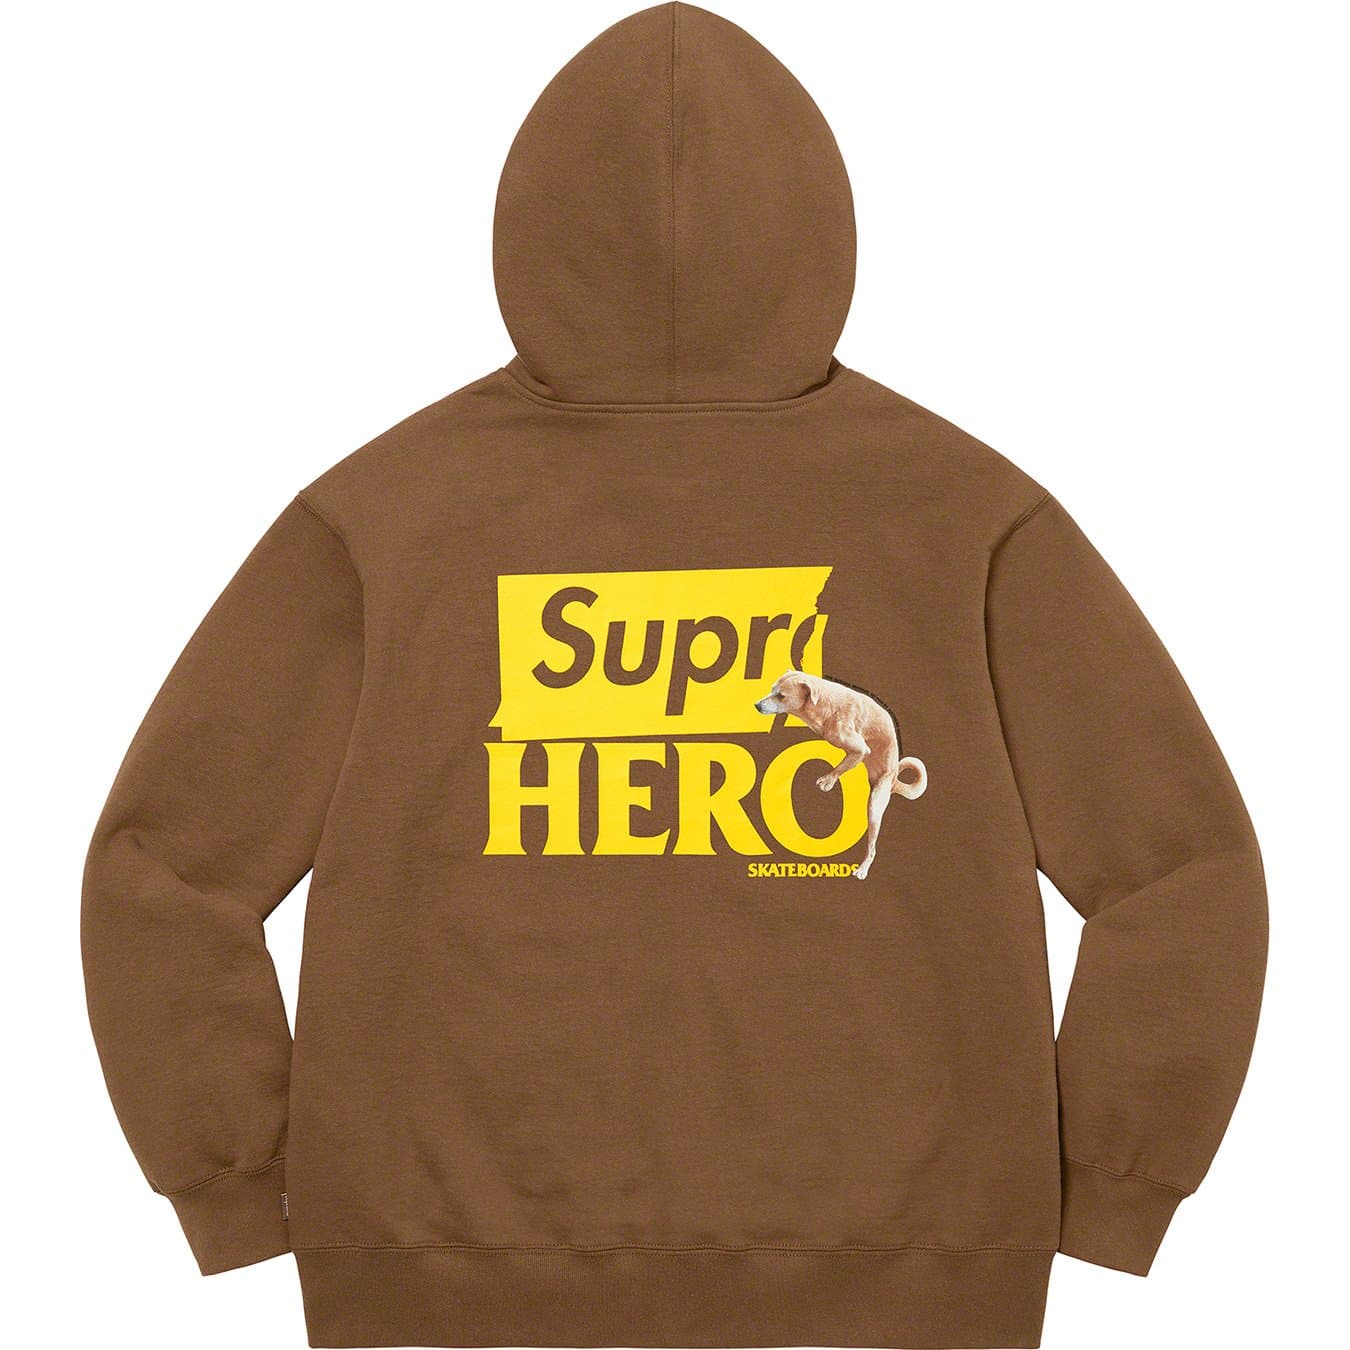 Supreme ANTIHERO Hooded Sweatshirt 黒 M